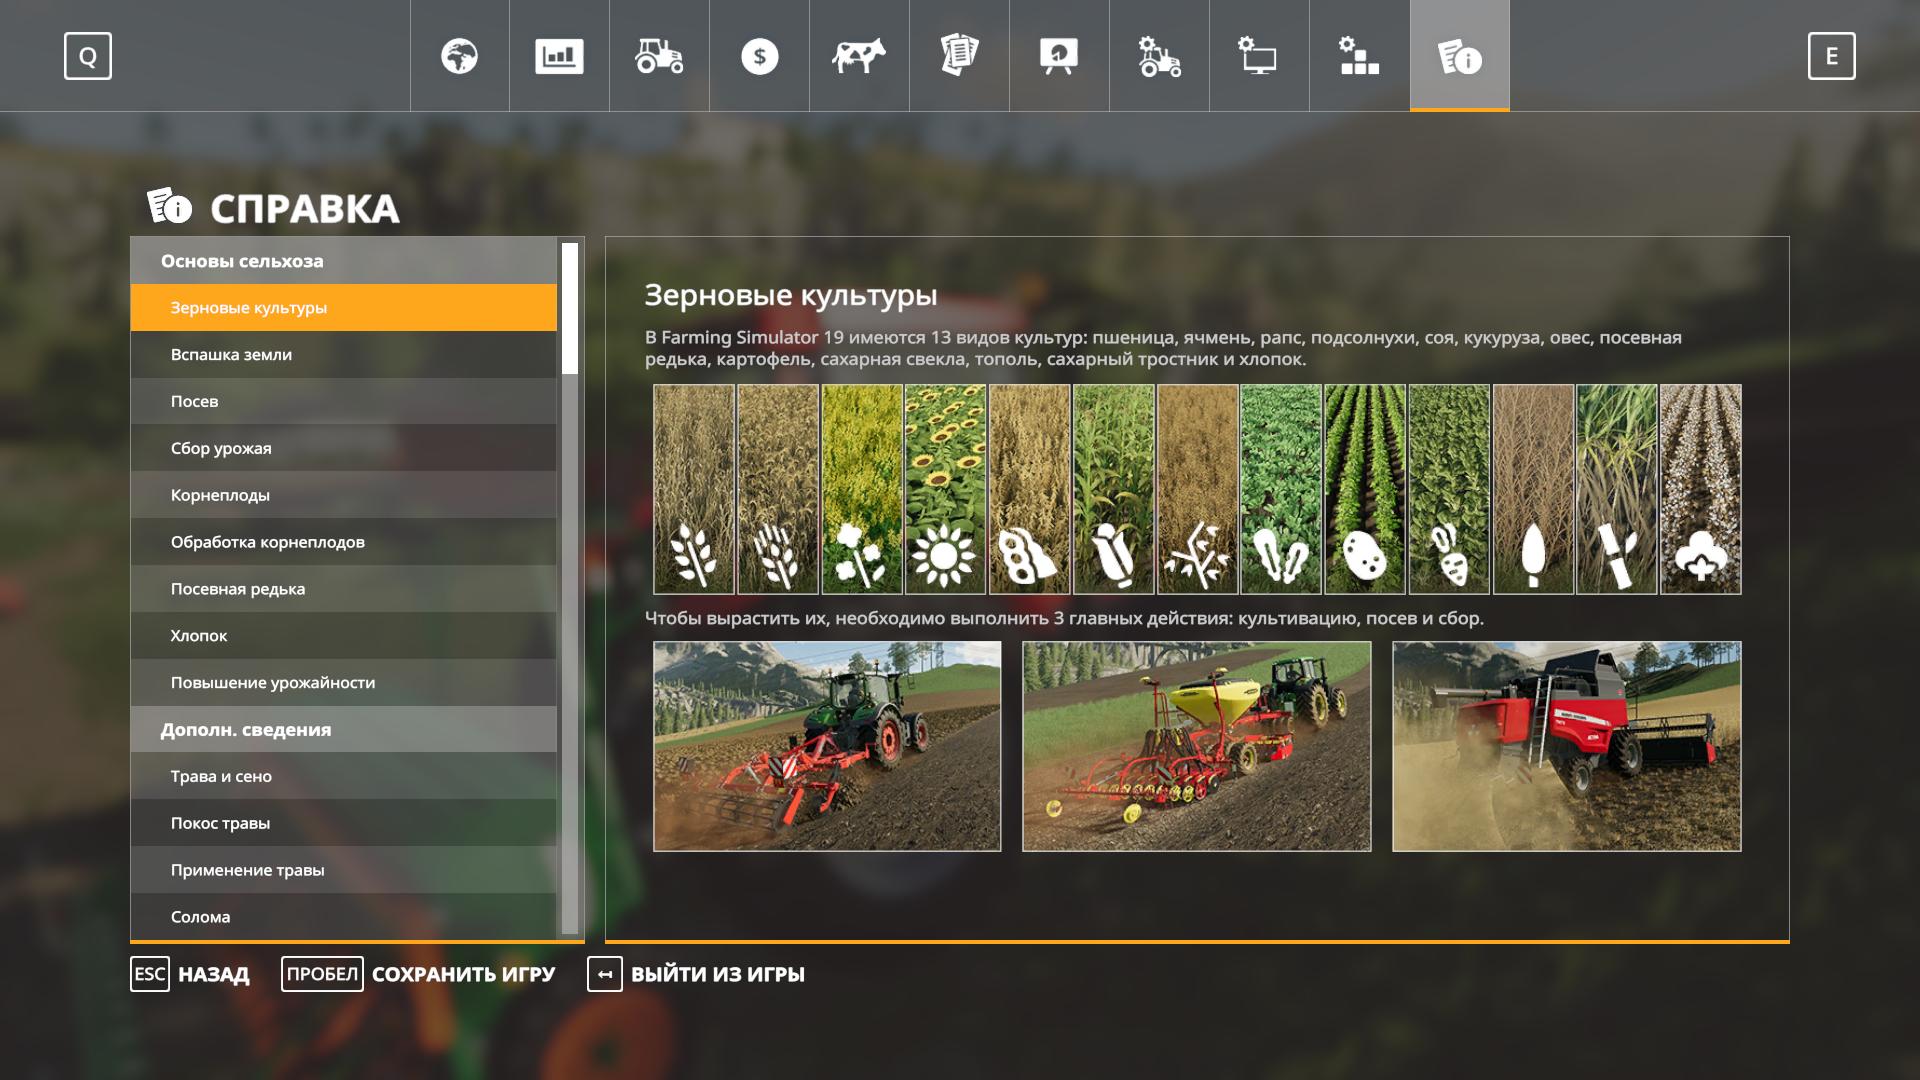 Farming Simulator 19 Platinum Expansion (v.1.7.1.0 DLC) RePack from Xatab Application Full Version